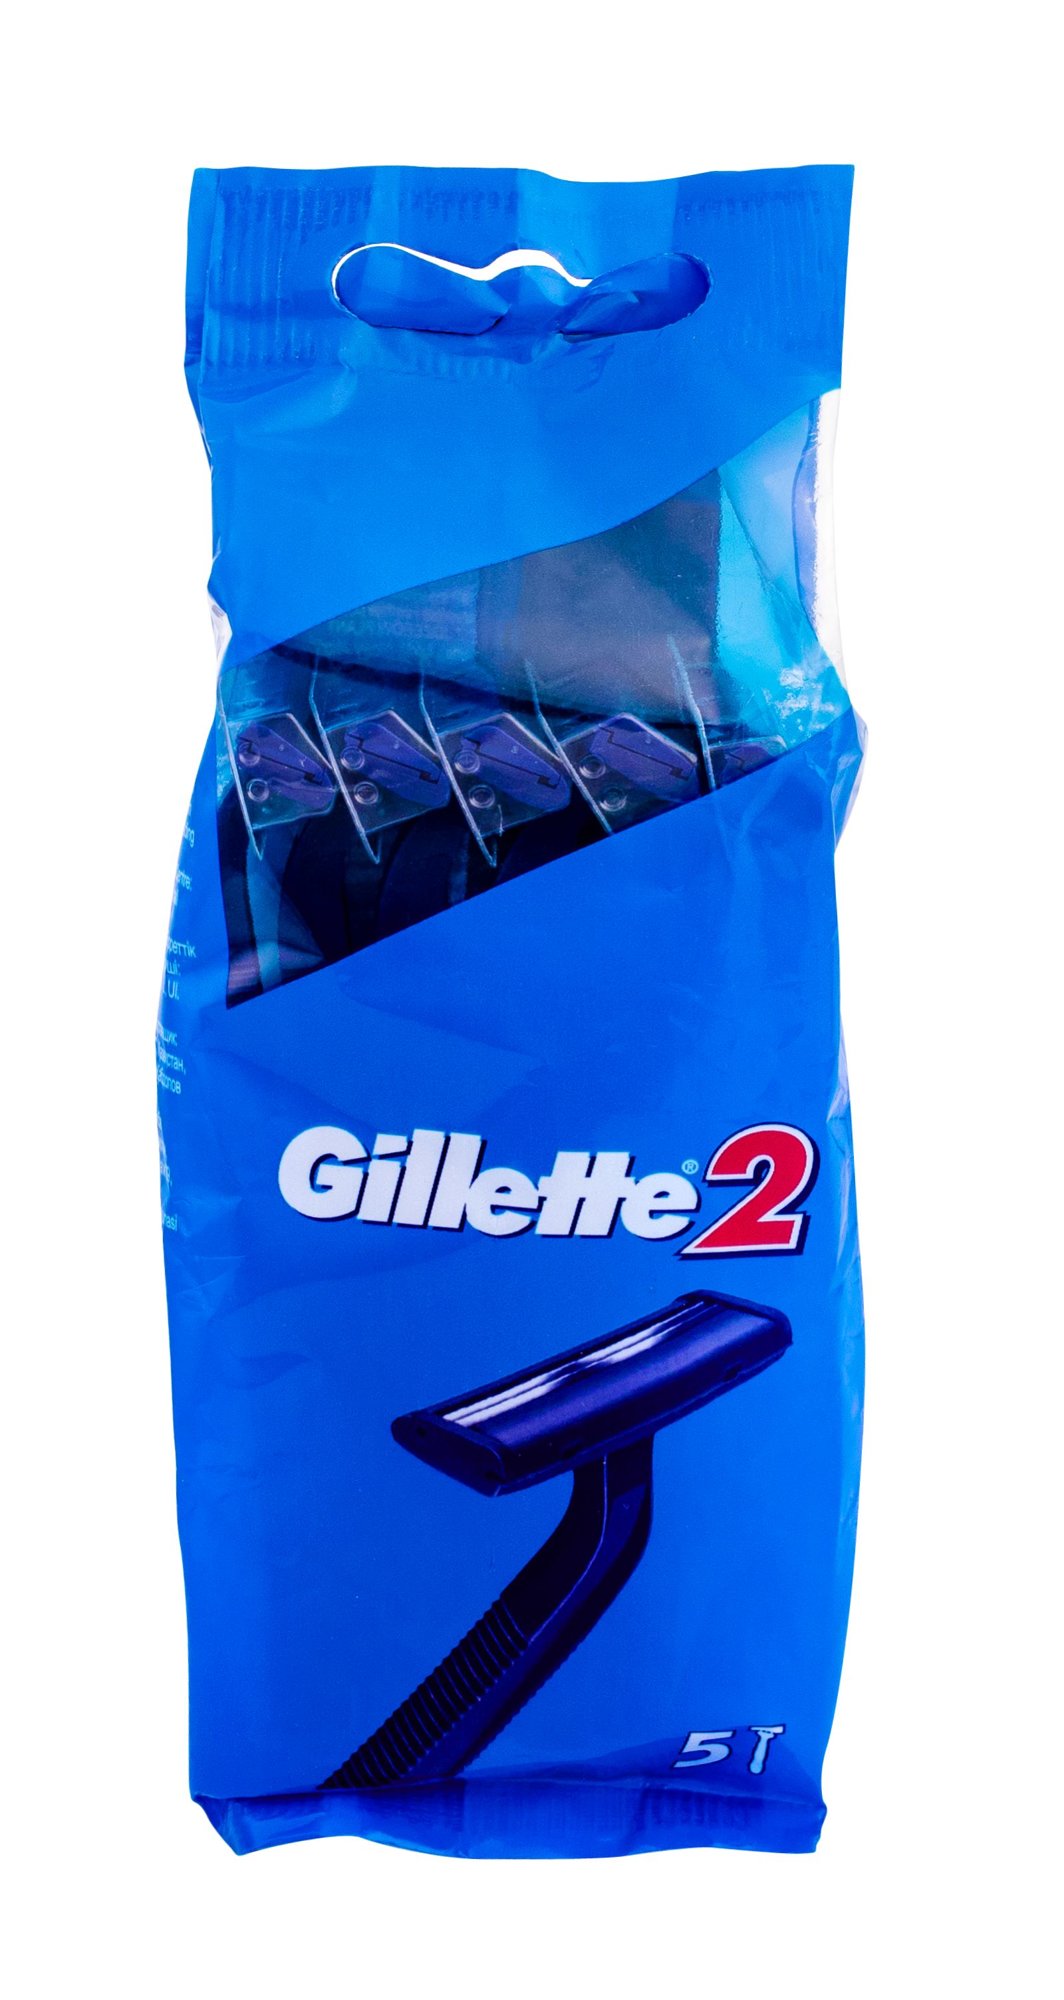 Gillette 2 skustuvas